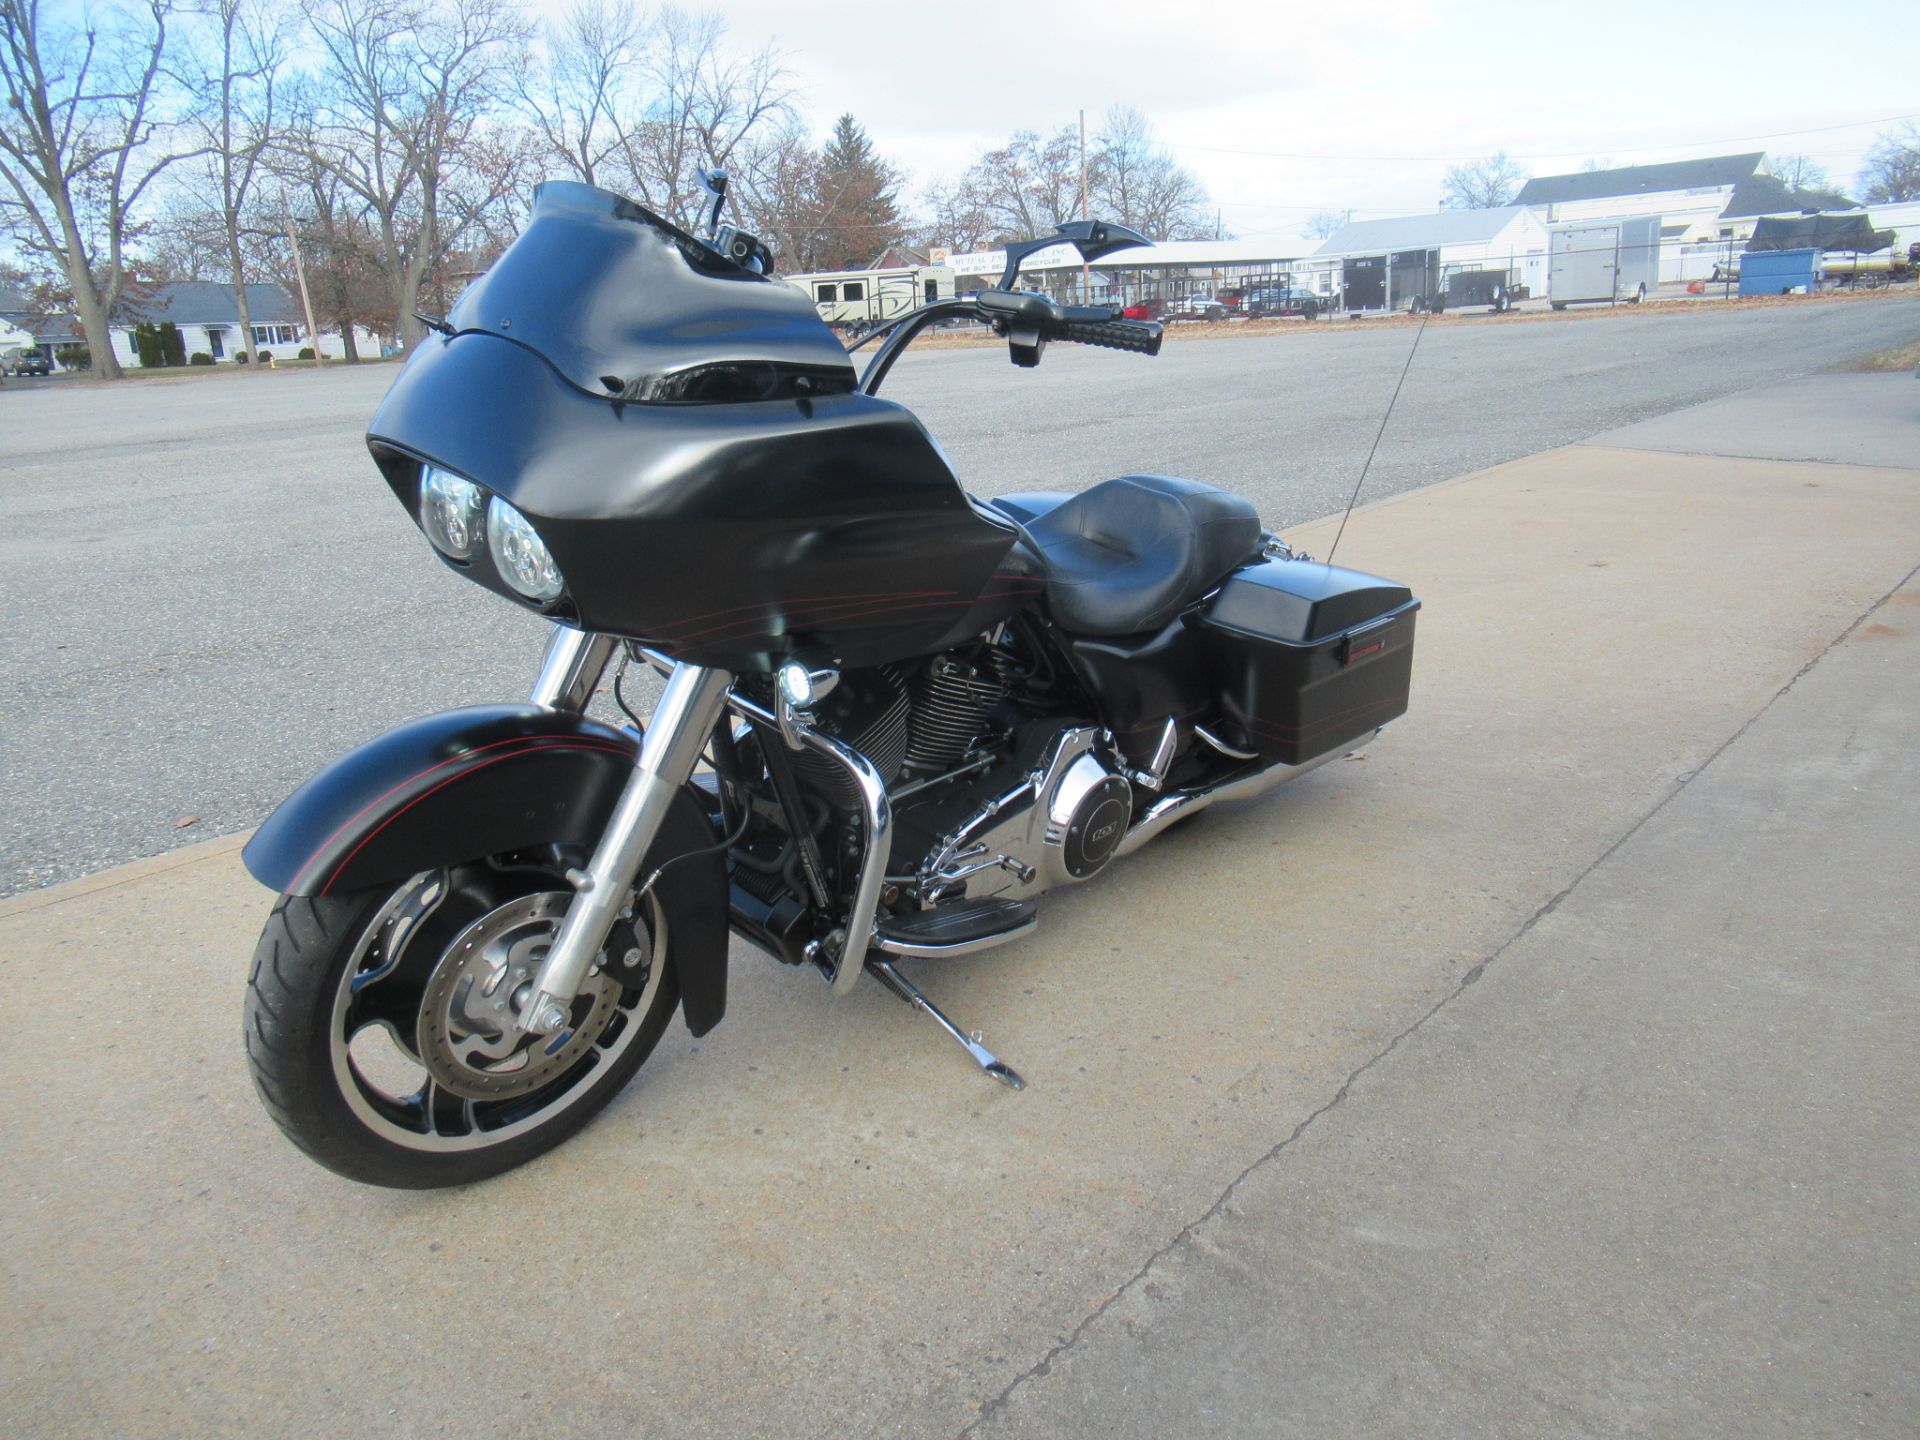 2013 Harley-Davidson Road Glide® Custom in Springfield, Massachusetts - Photo 6